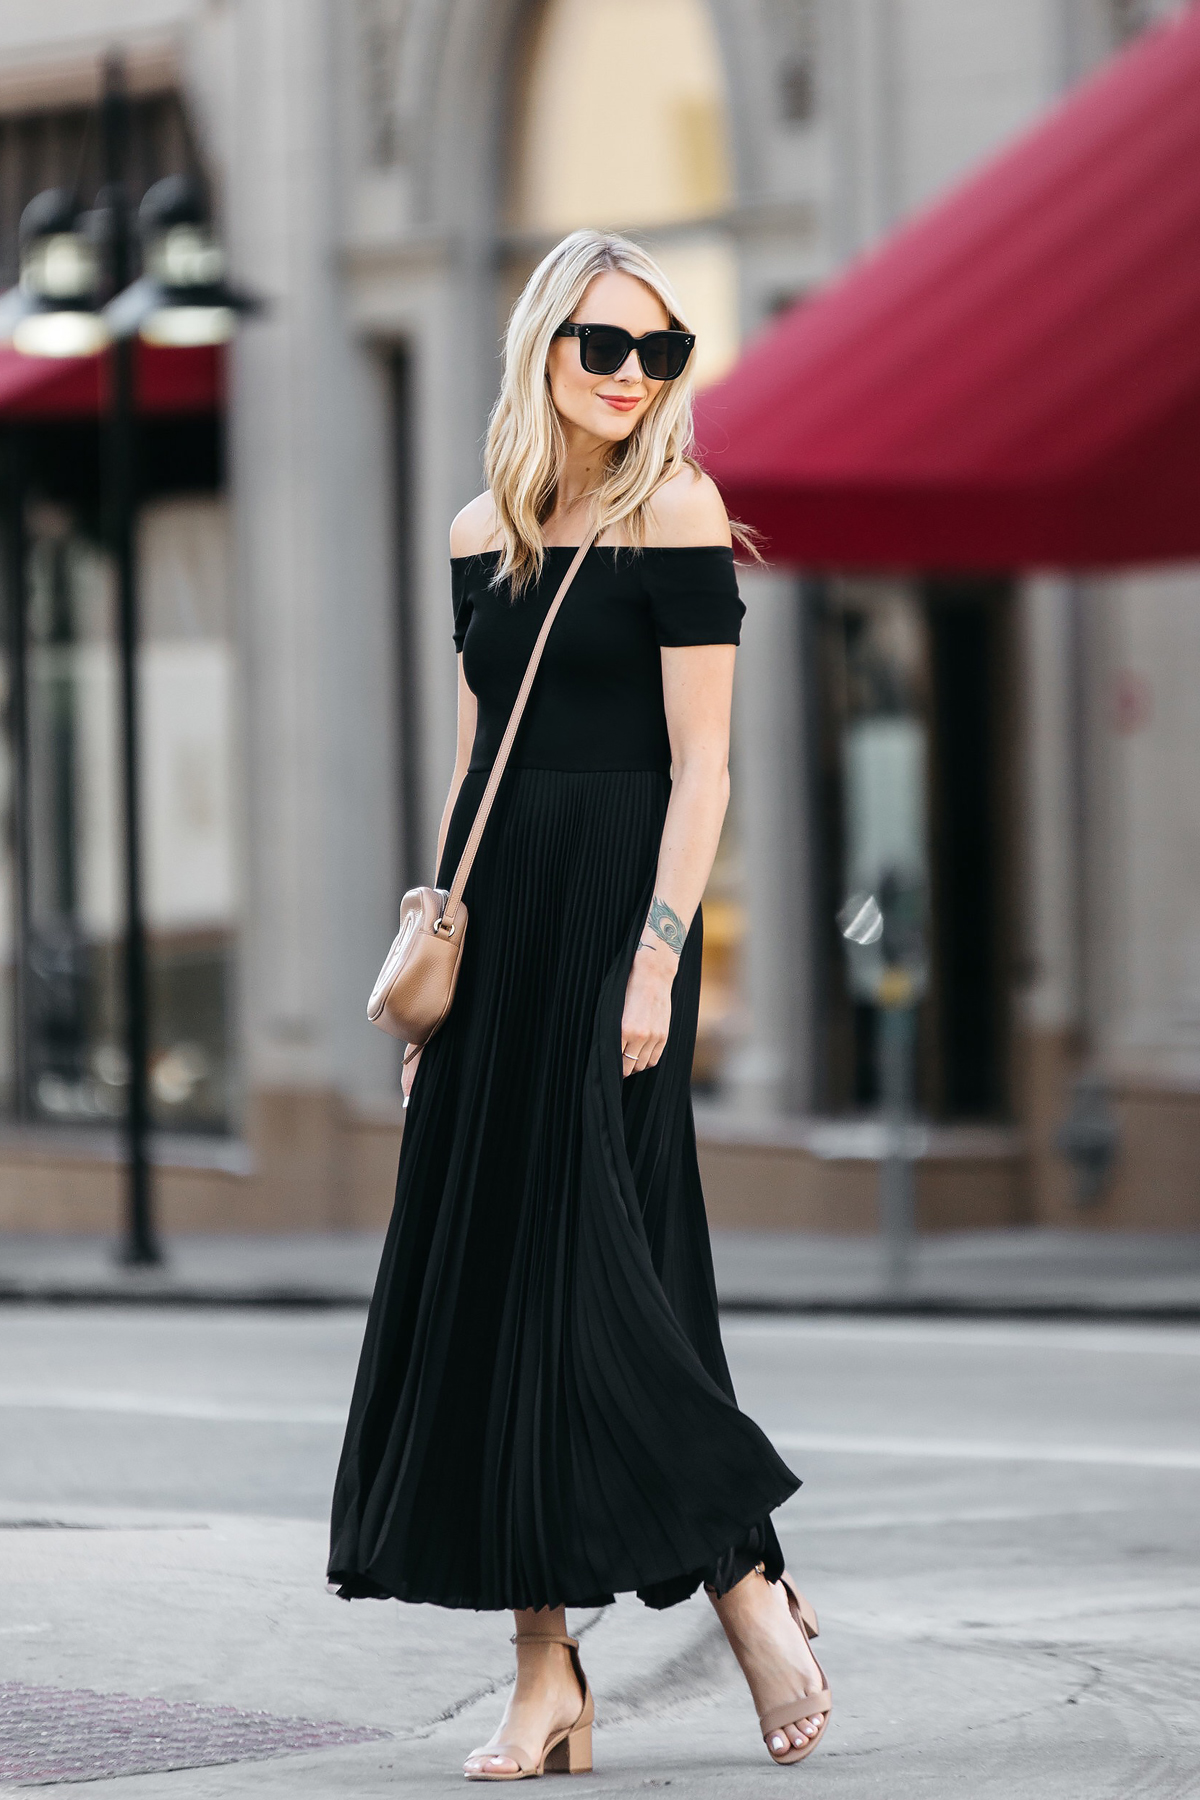 black dress with tan heels